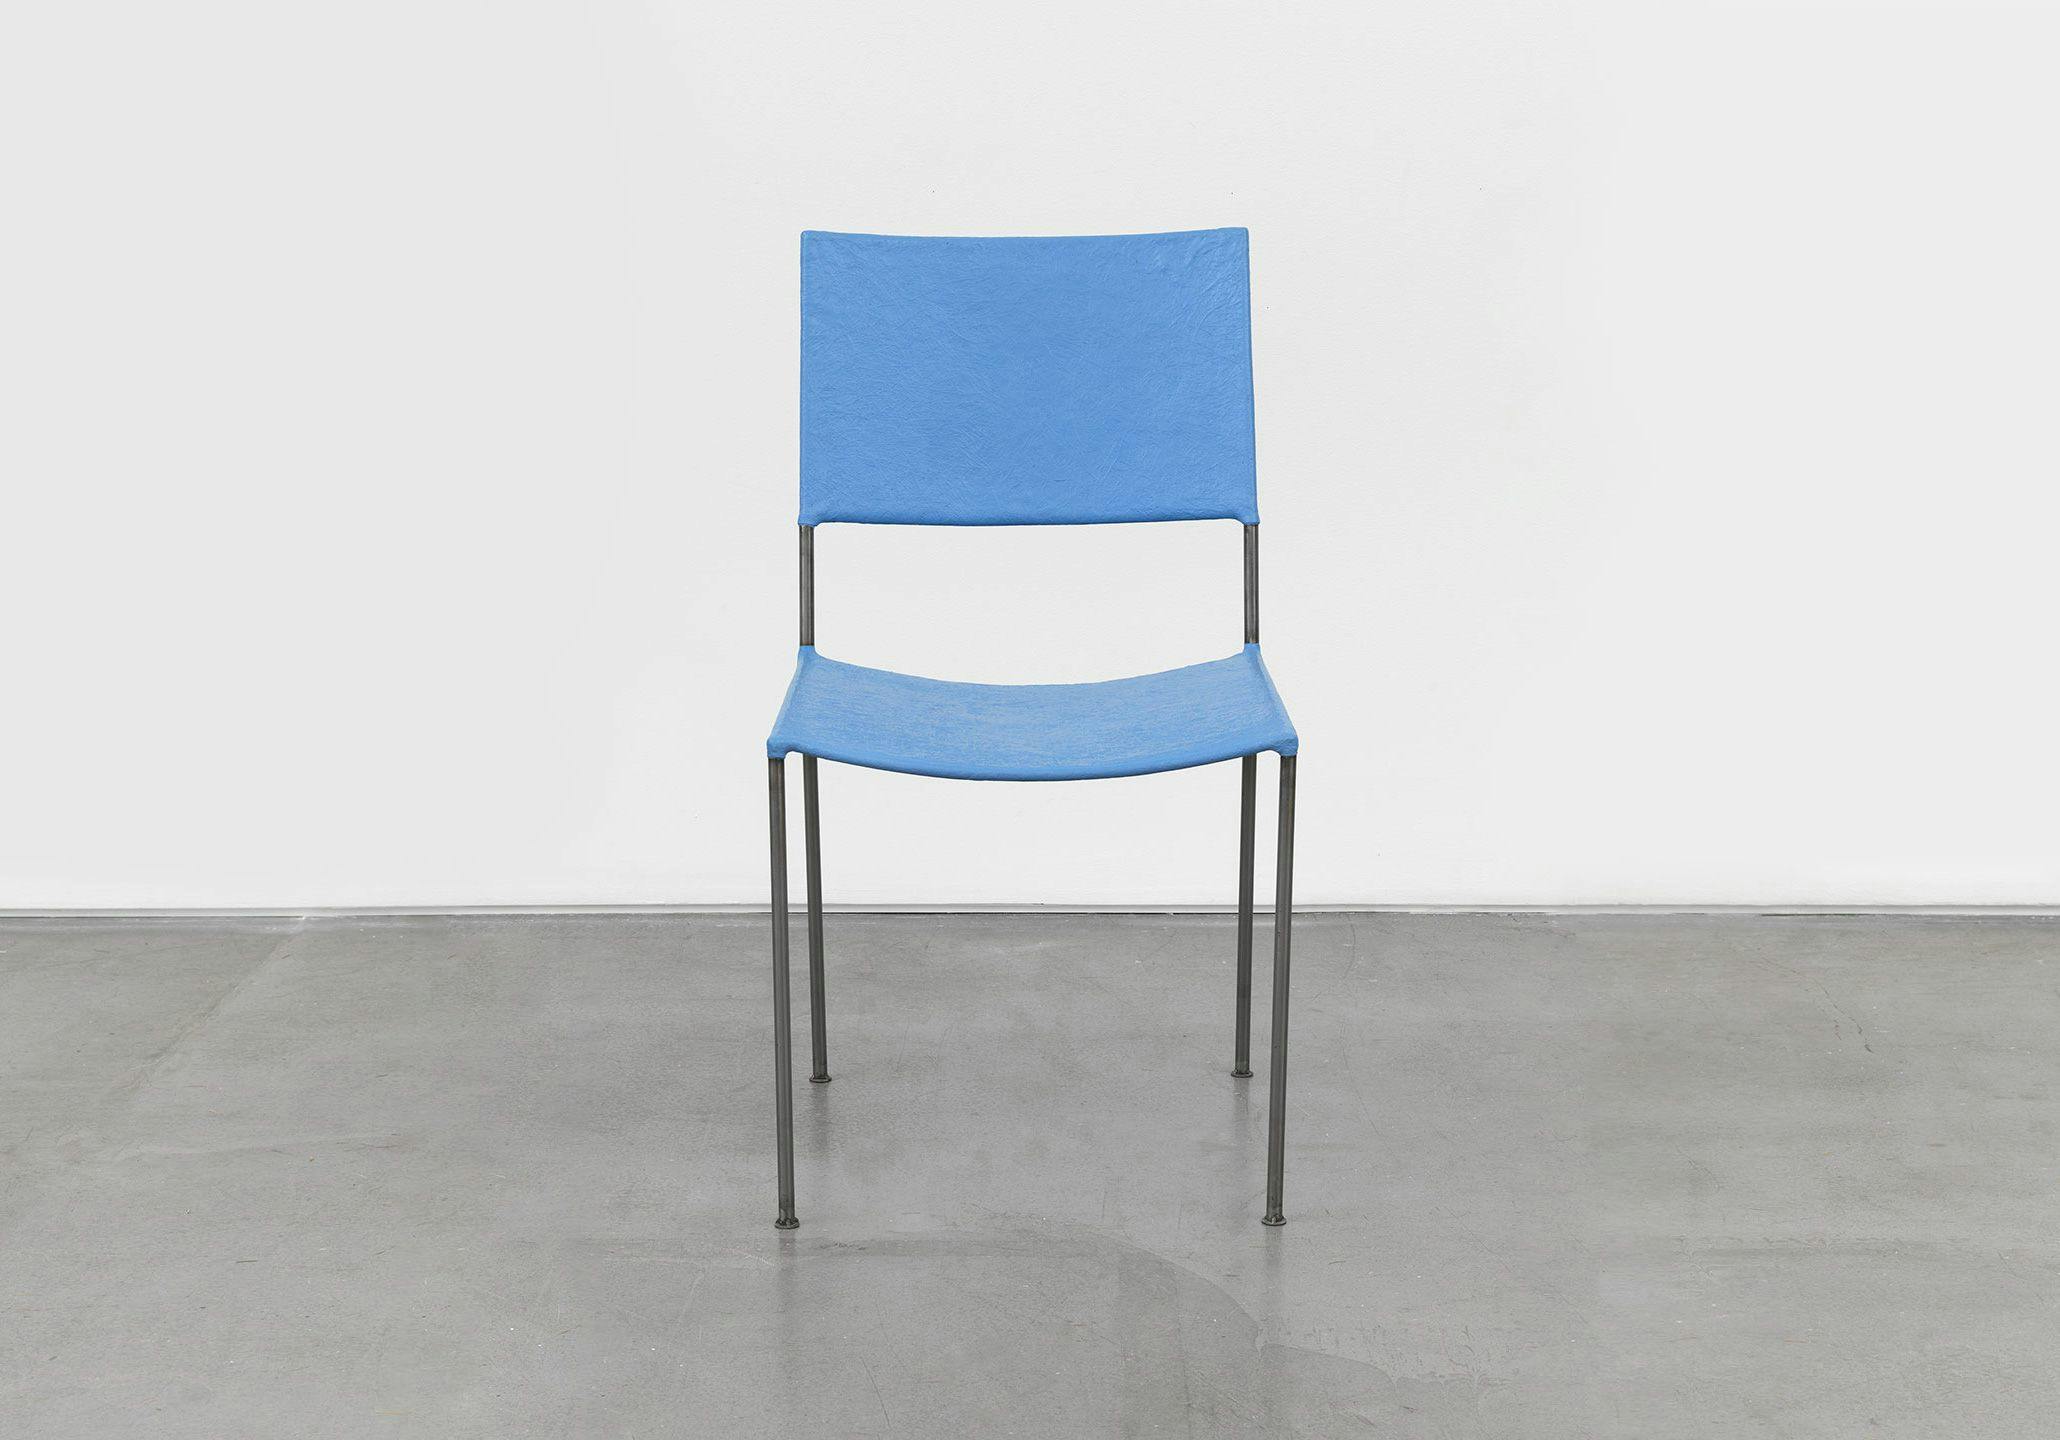 A furniture work by Franz West, titled K√ºnstlerstuhl (Artist's Chair), dated 2006/2015